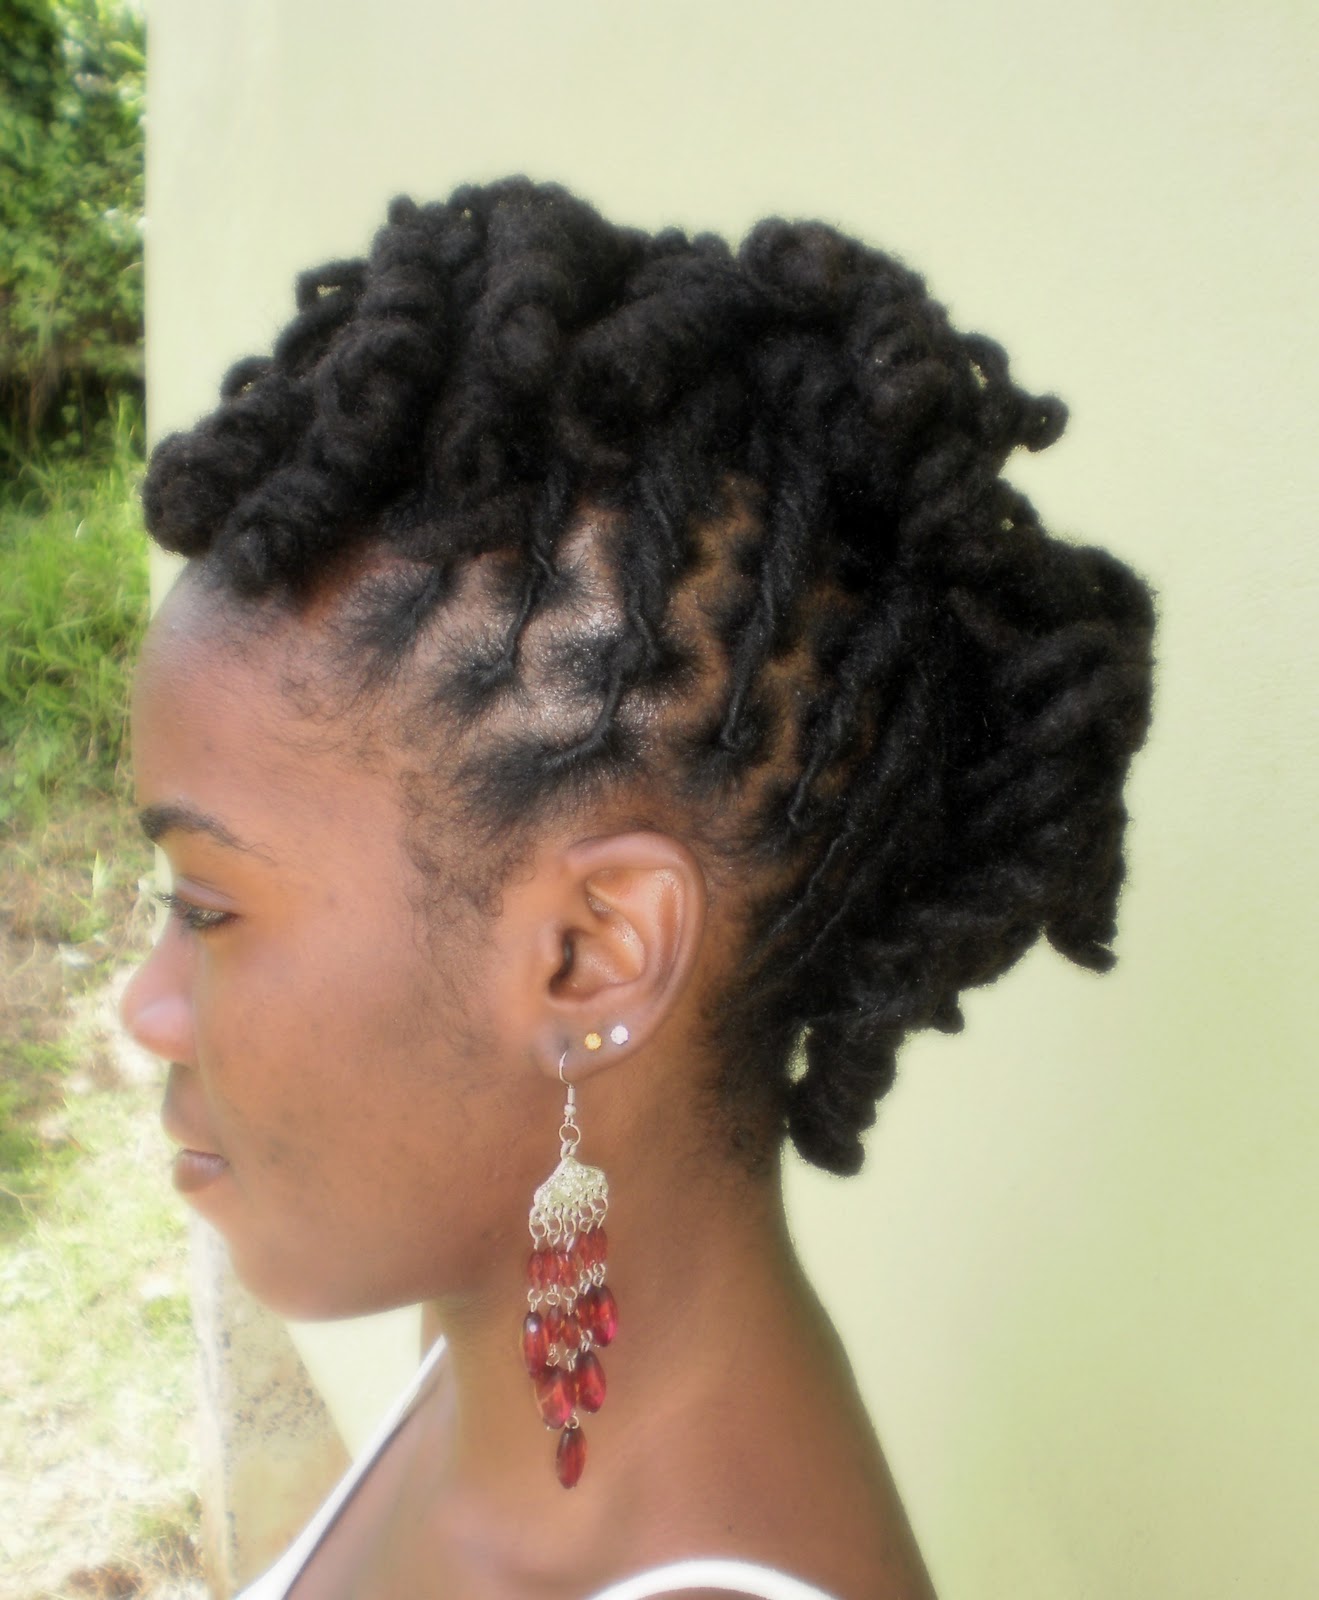 http://4.bp.blogspot.com/-3tDb5kT488k/TxK-BtTD6qI/AAAAAAAADqs/NYsbnHLKDzQ/s1600/cabelo-negro-afro-morenas-inspiracao-ideias-estilos-cortes-penteados-dread-trancas-prontocortei-cabelos-6.jpg